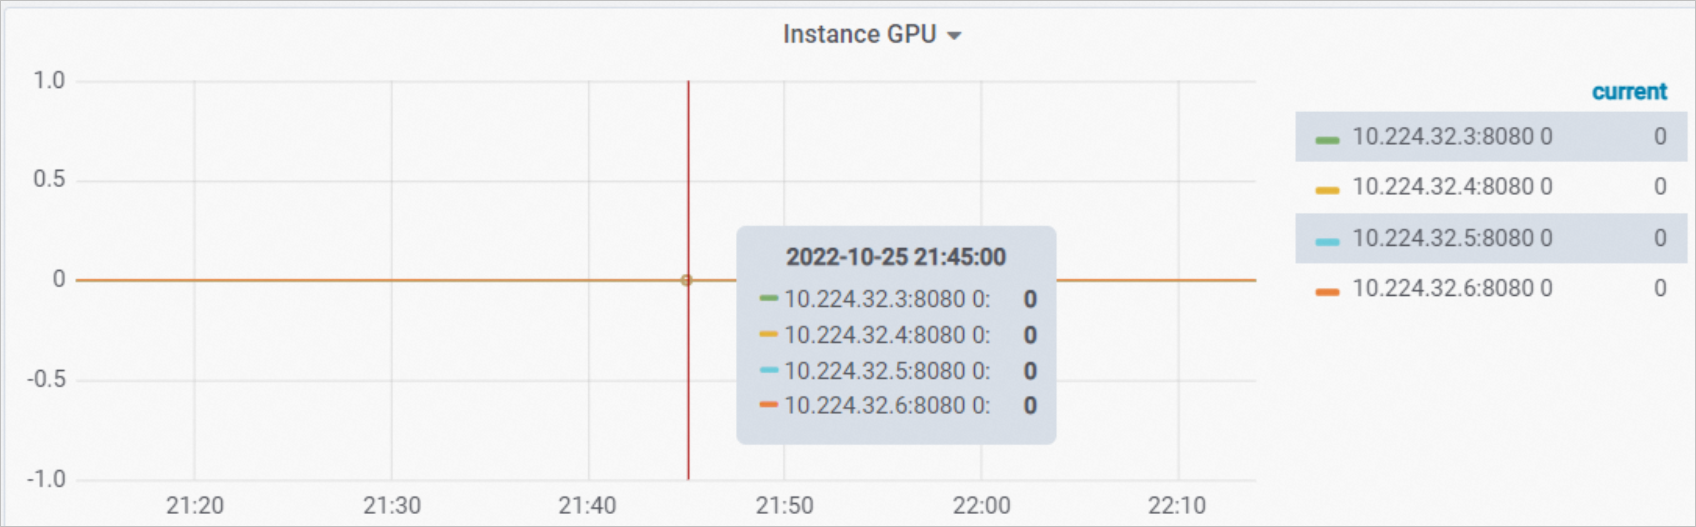 Instance GPU